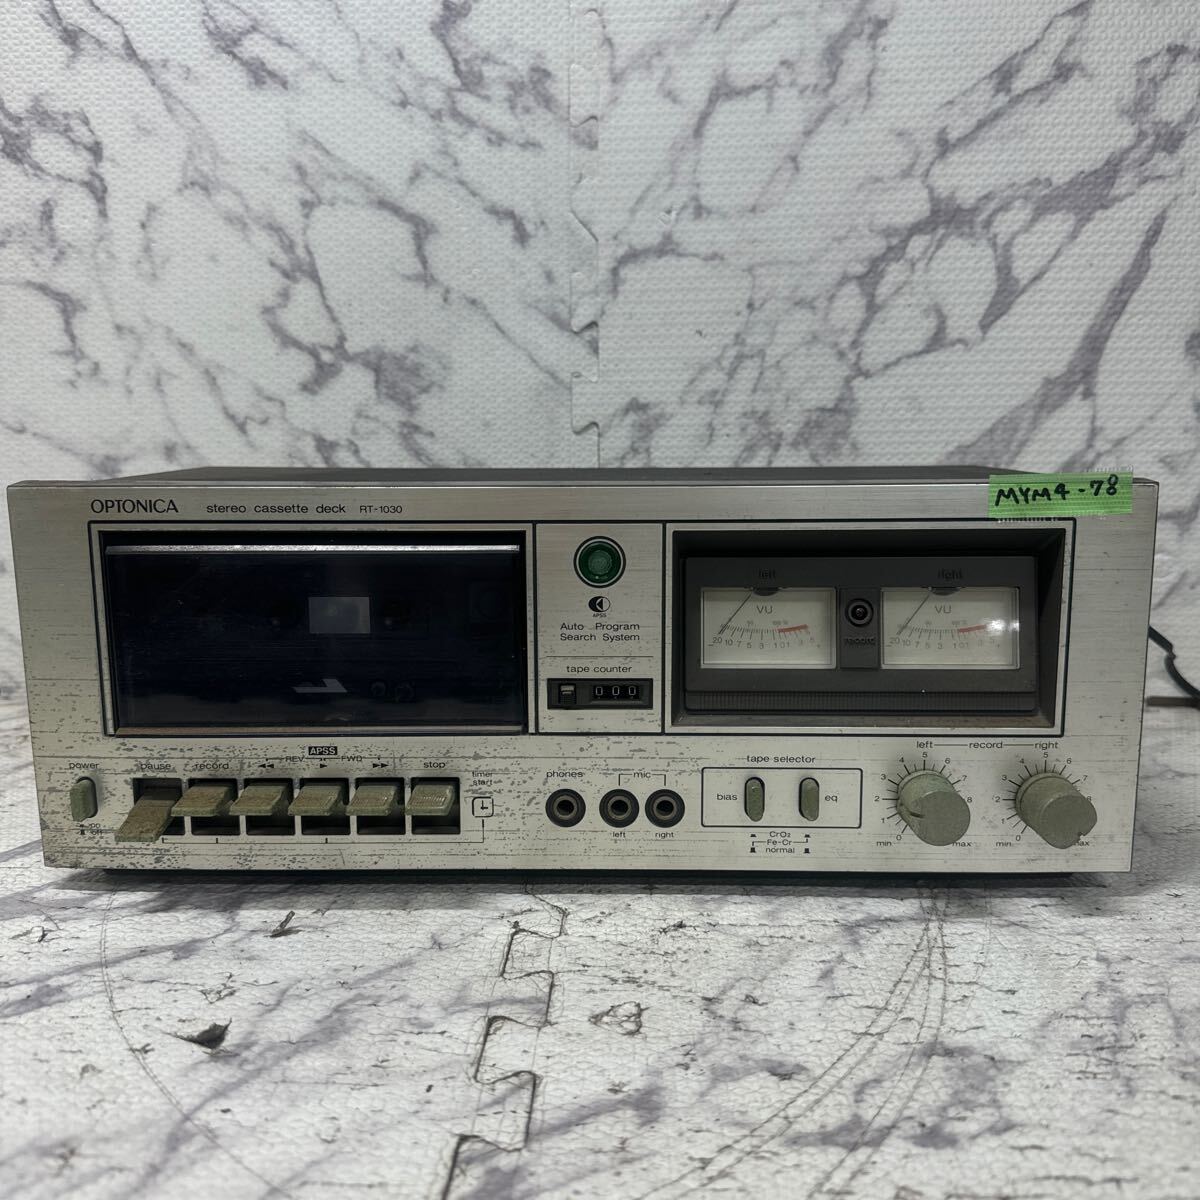 MYM4-78 激安 OPTONICA Stereo Cassette Deck RT-1030 カセットデッキ 通電不可 ジャンク品 ※3回再出品で処分の画像1